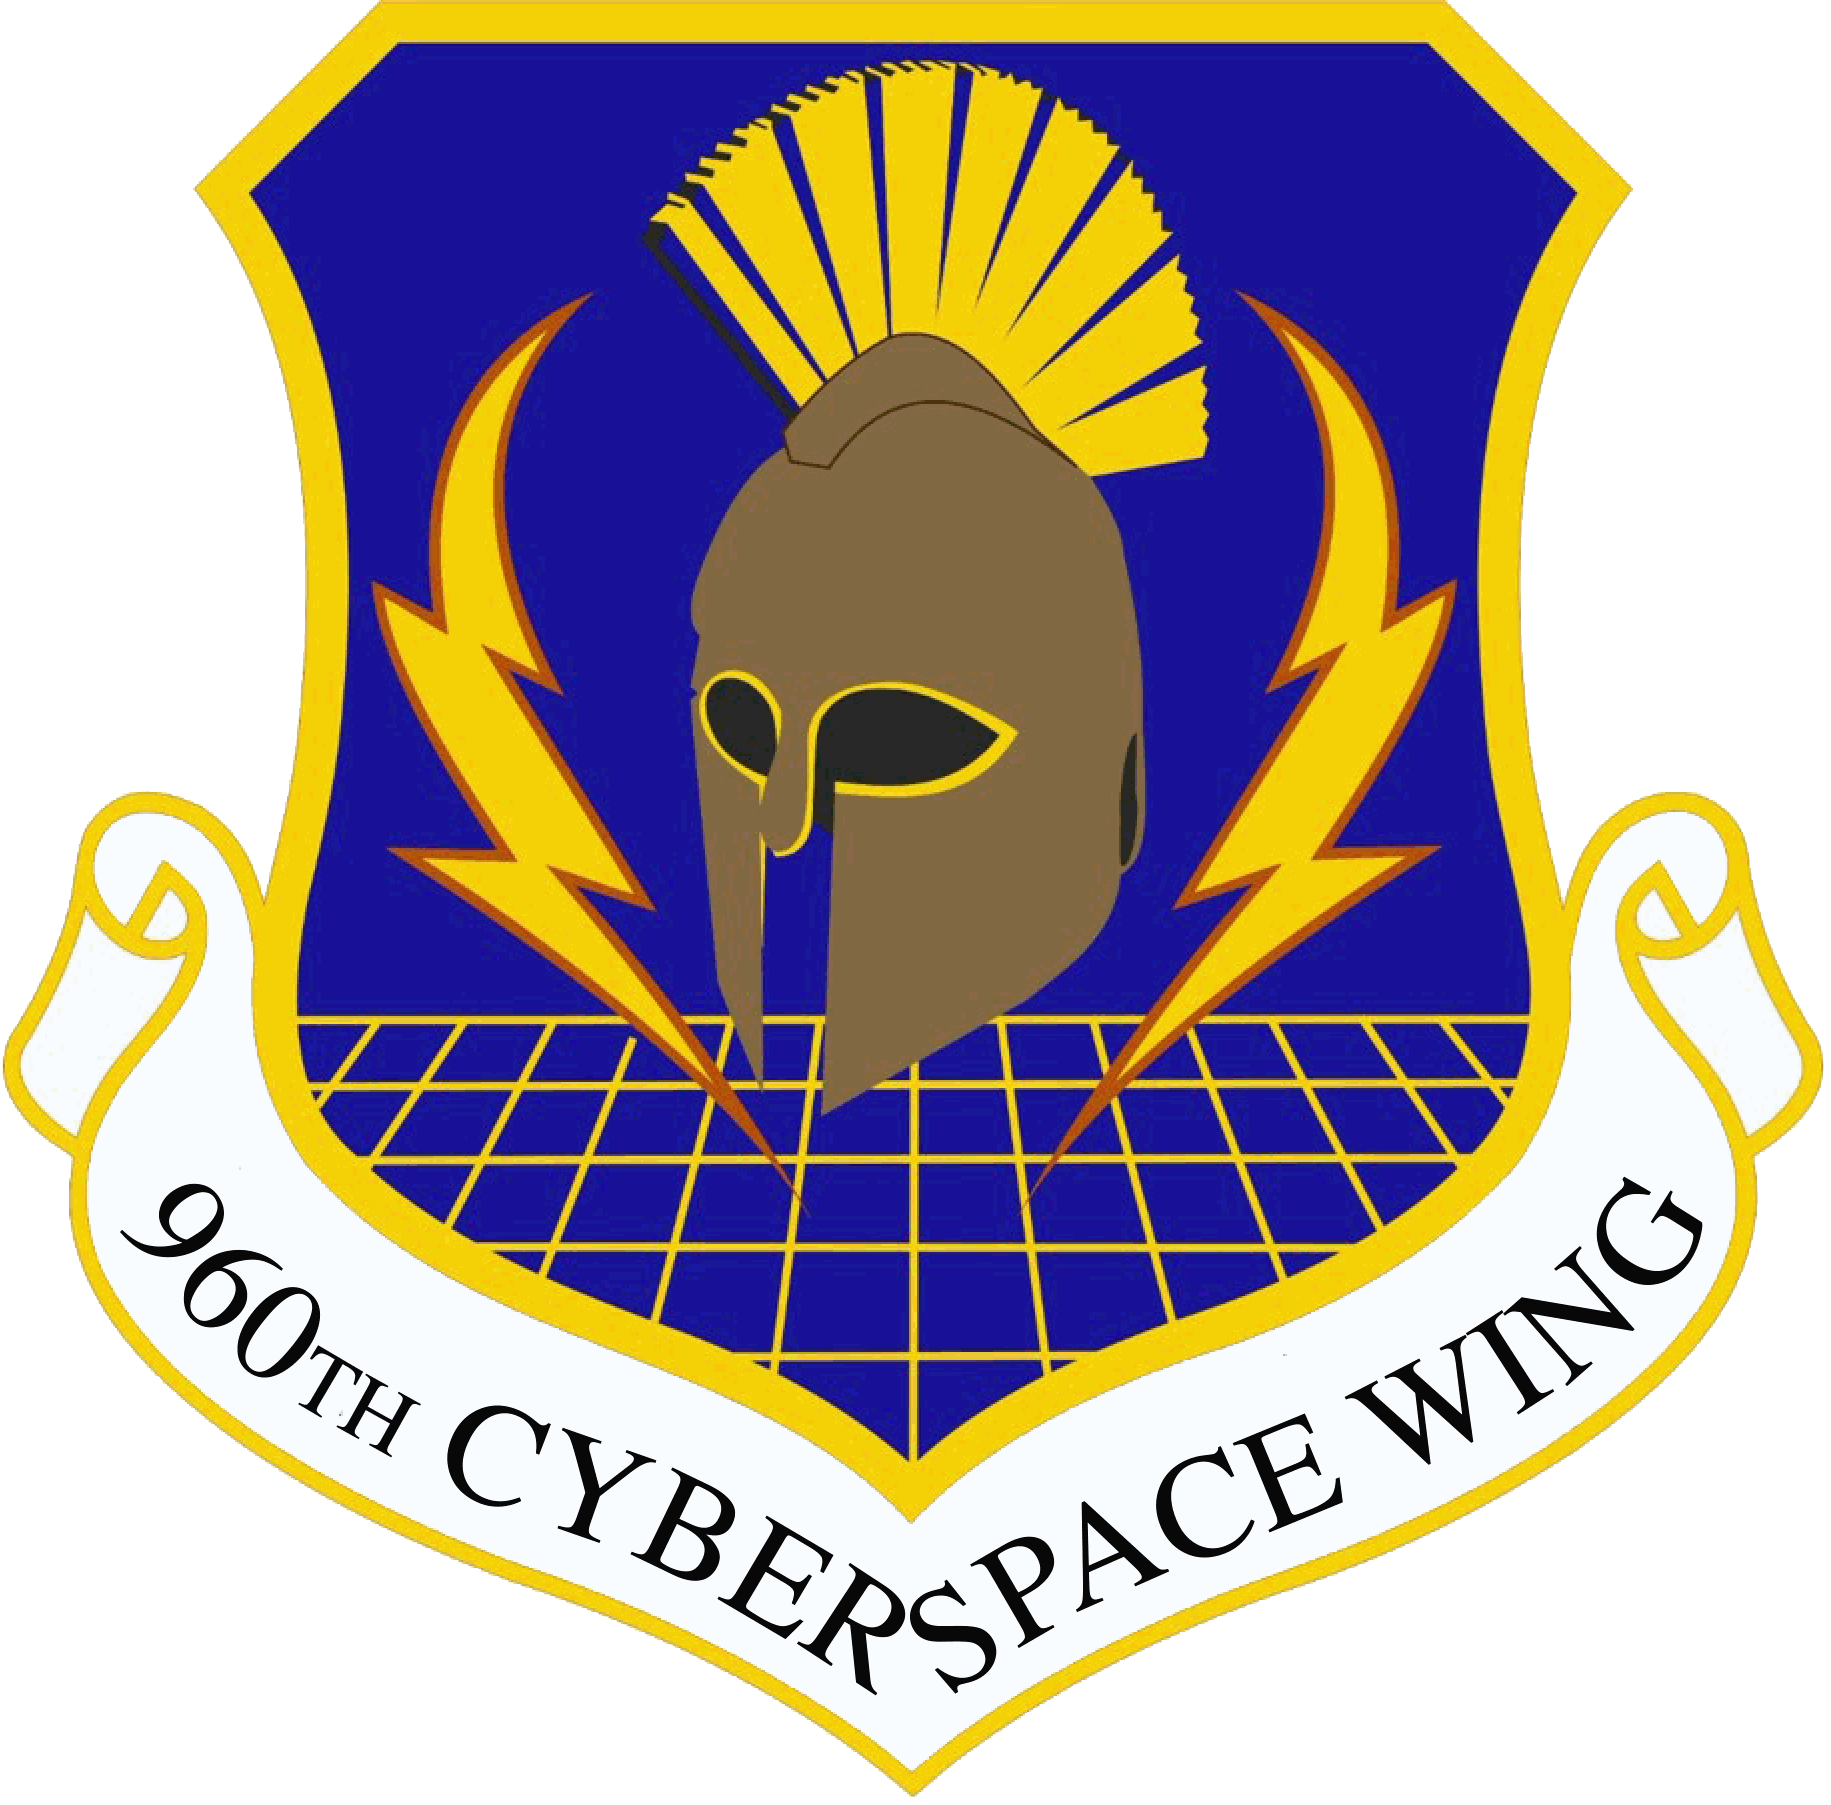 960 Cyberspace Wing Emblem